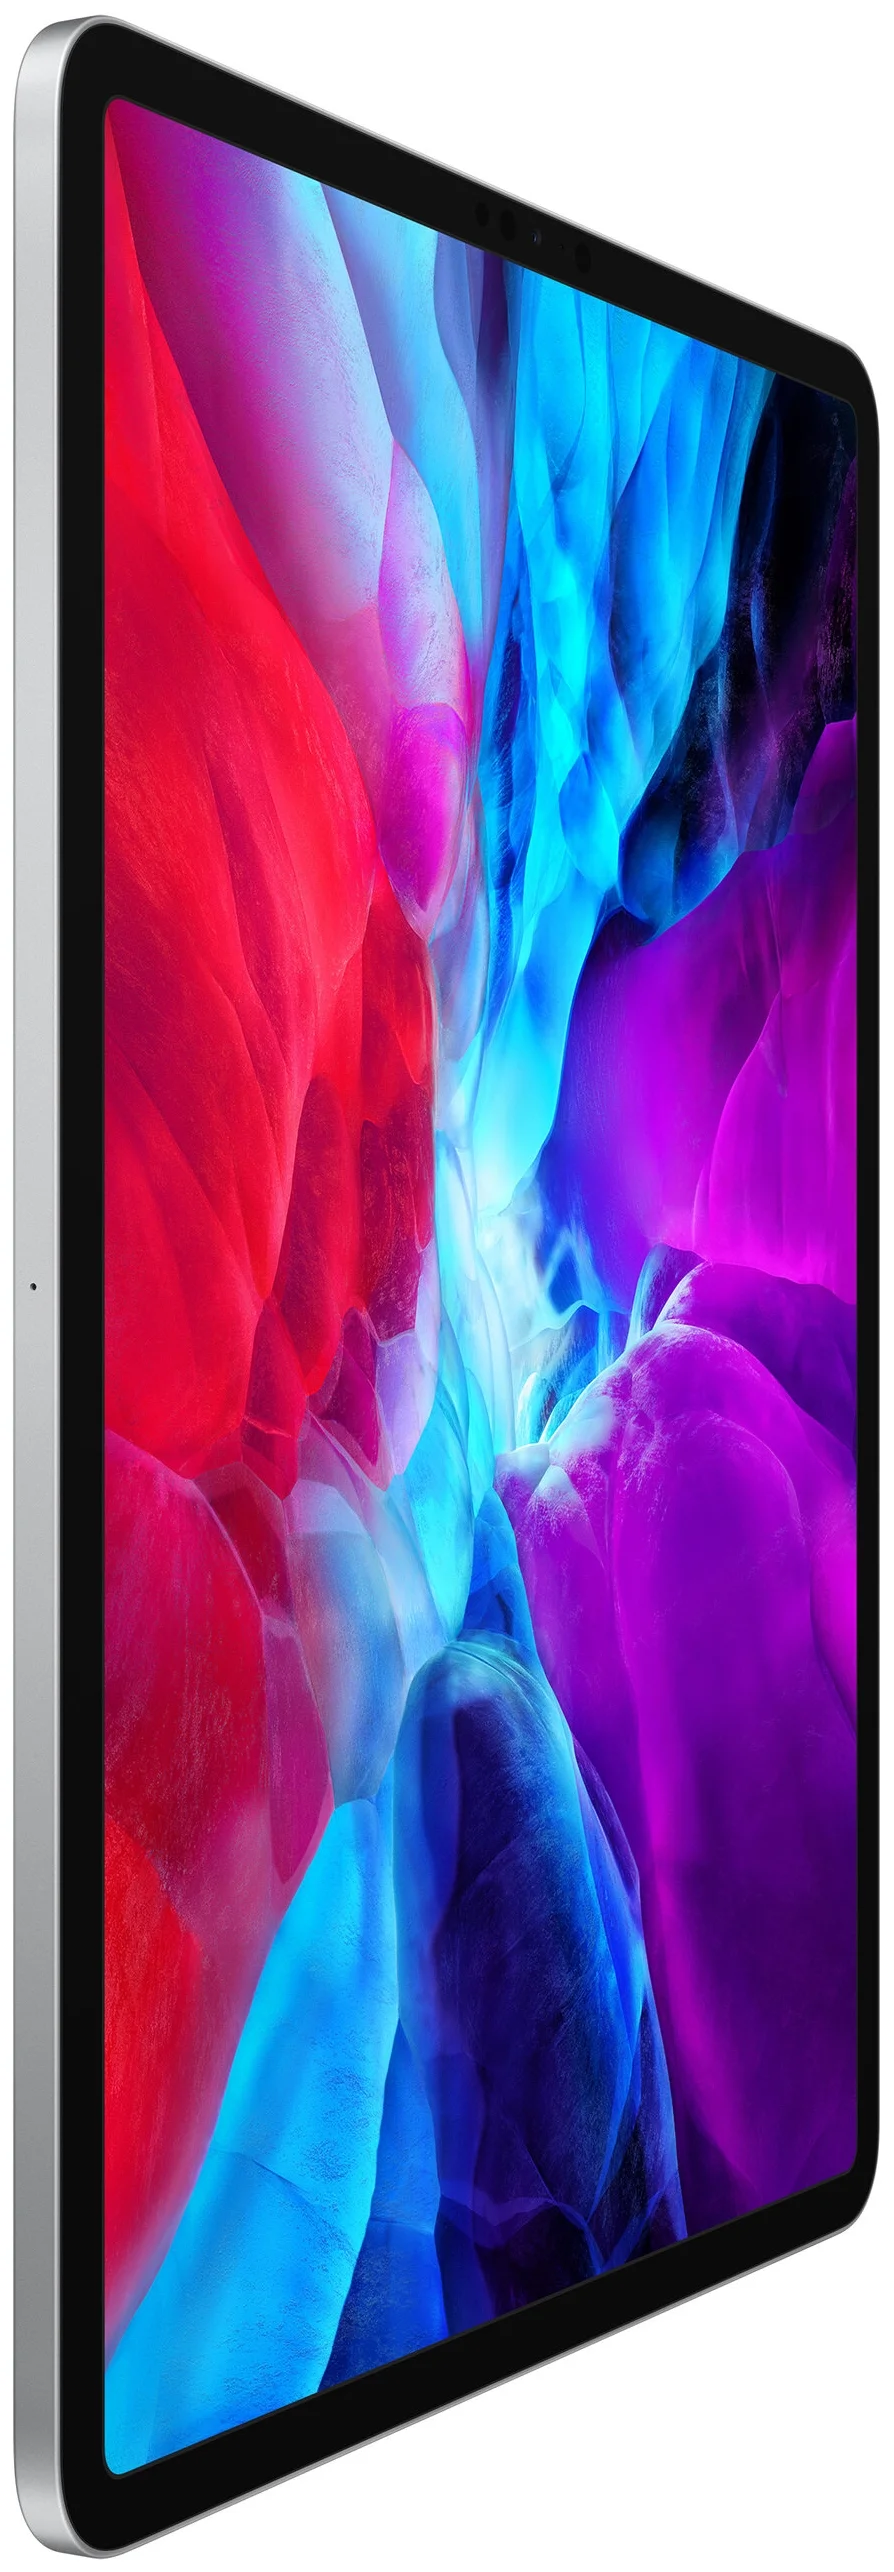 Apple iPad Pro 12.9 (2020) 256Gb Wi-Fi + Cellular - встроенная память: 256 ГБ